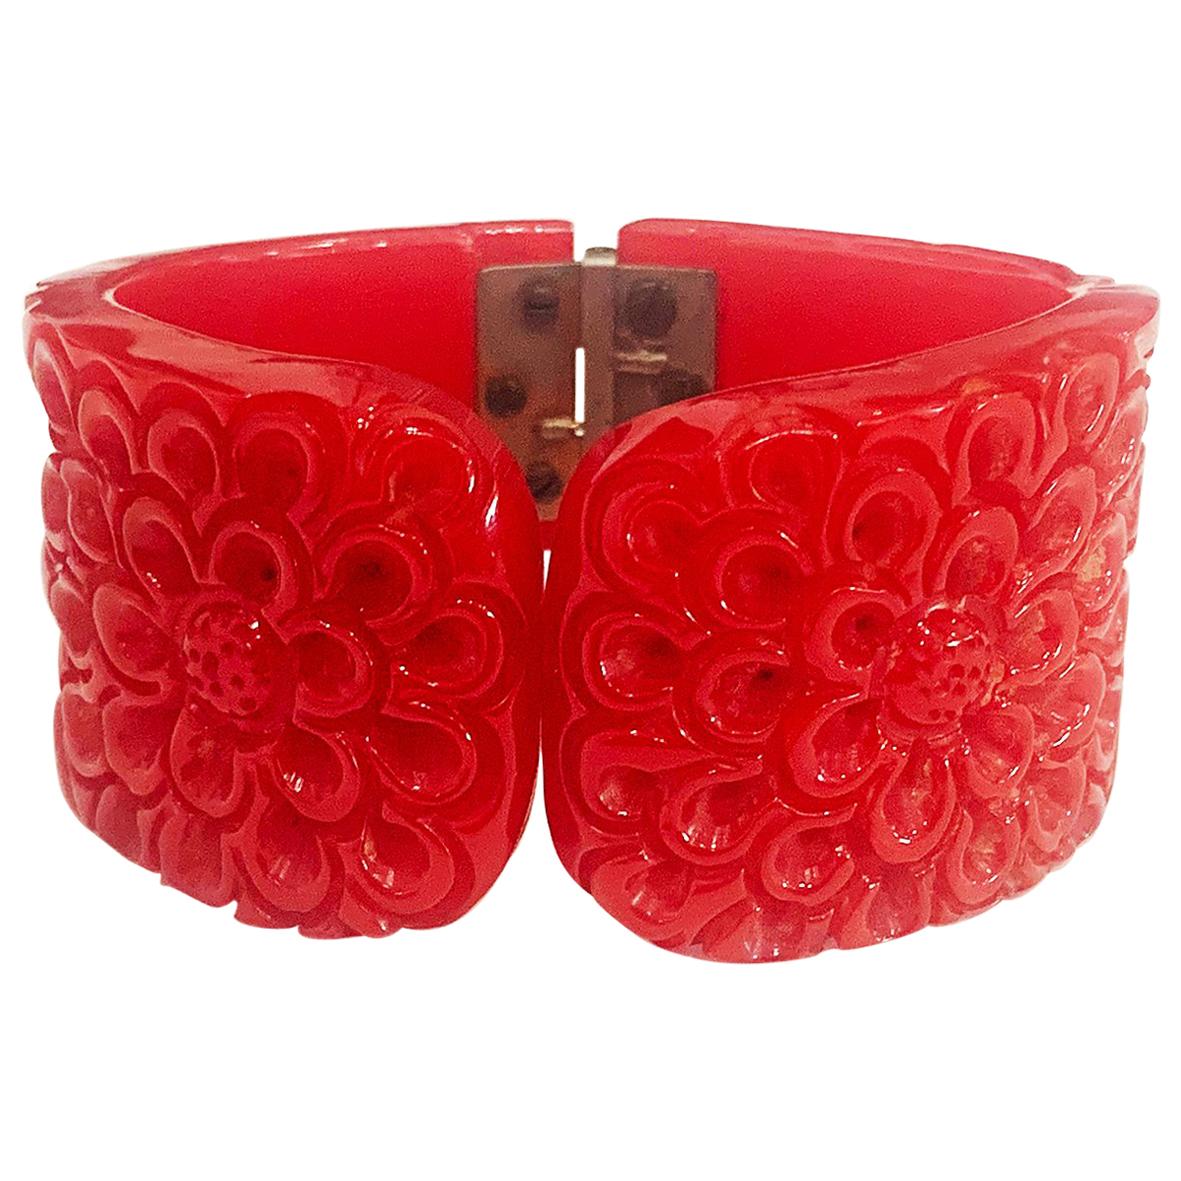 Art Deco heavily carved Lipstick red clamper hinged bangle bracelet